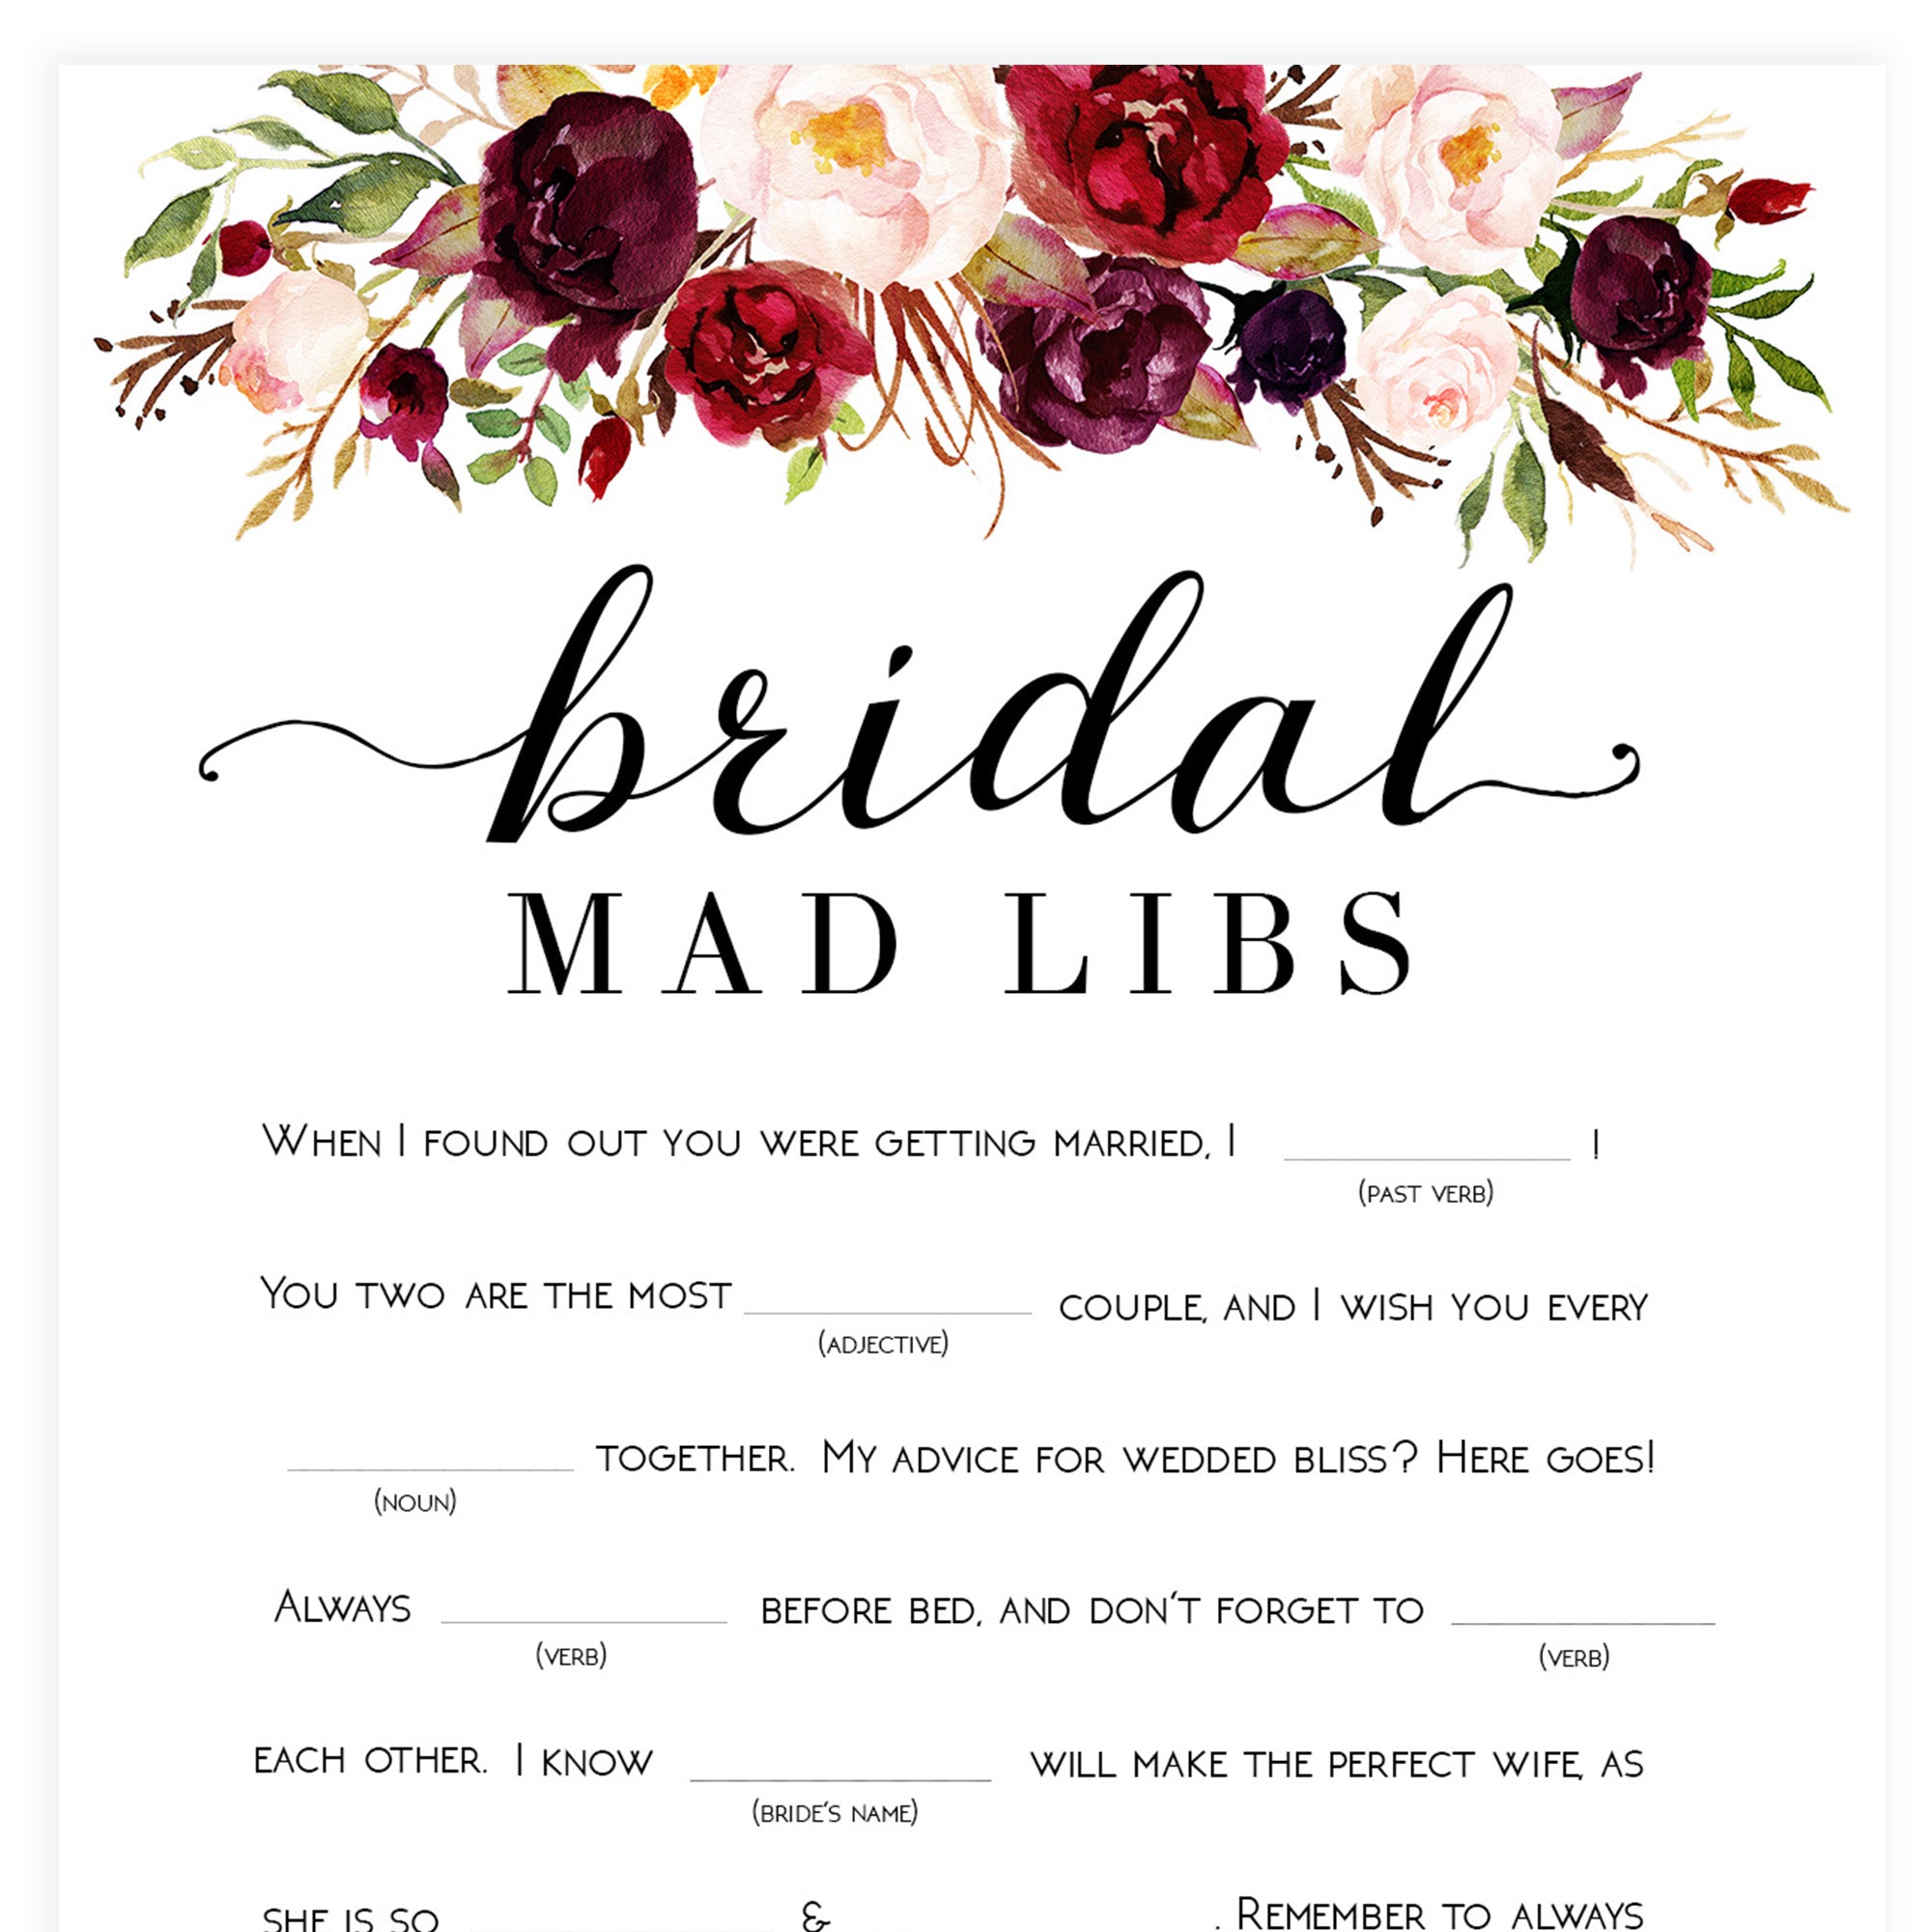 Bridal Mad Libs Game - White Marsala